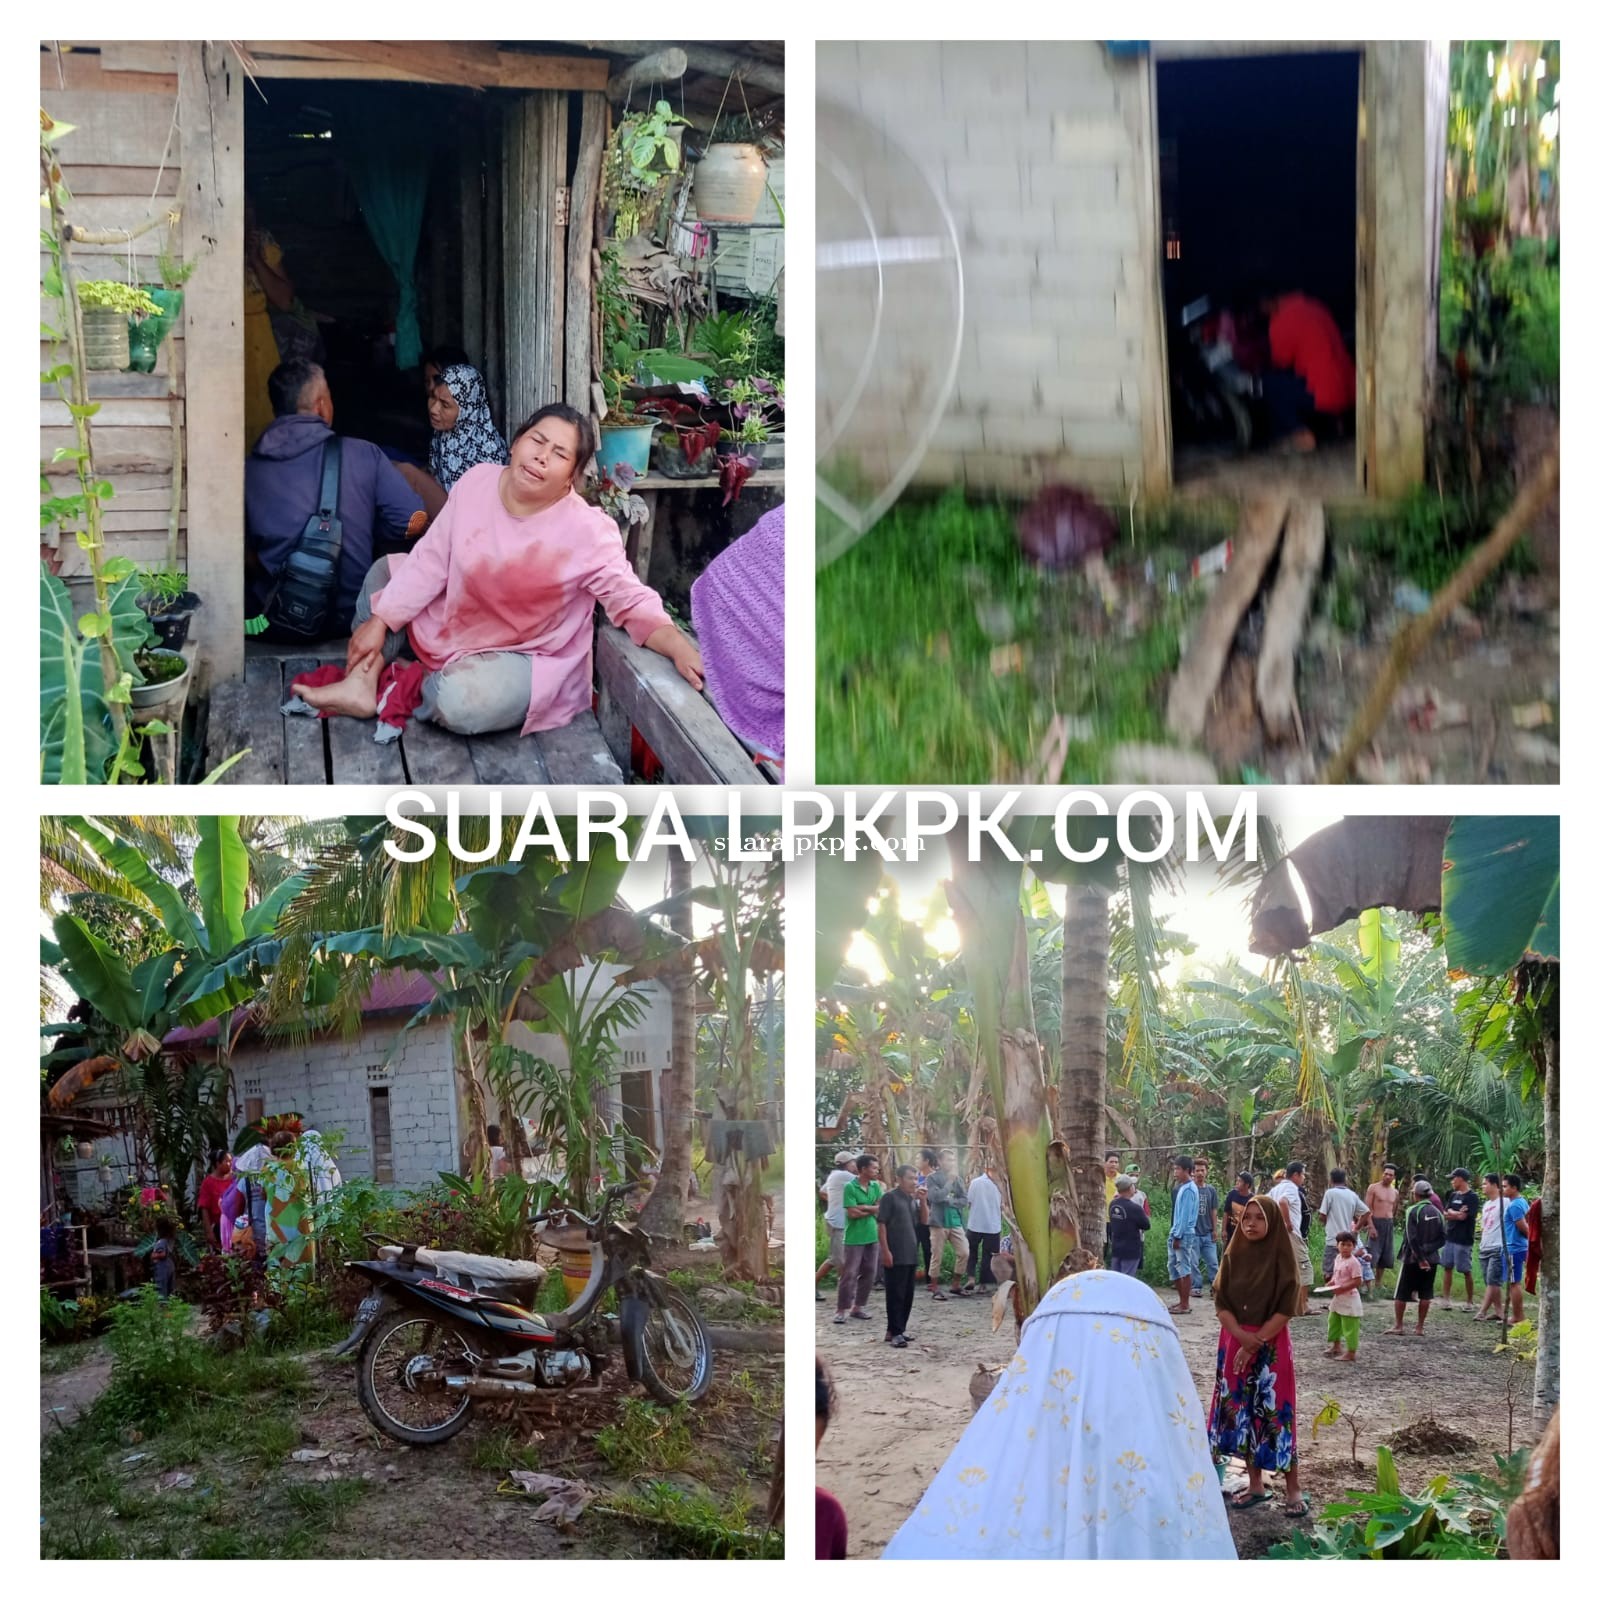 Telah Terjadi Pembacokan Di Desa Gayung Bersambut Kecamatan Selakau Kabupaten Sambas